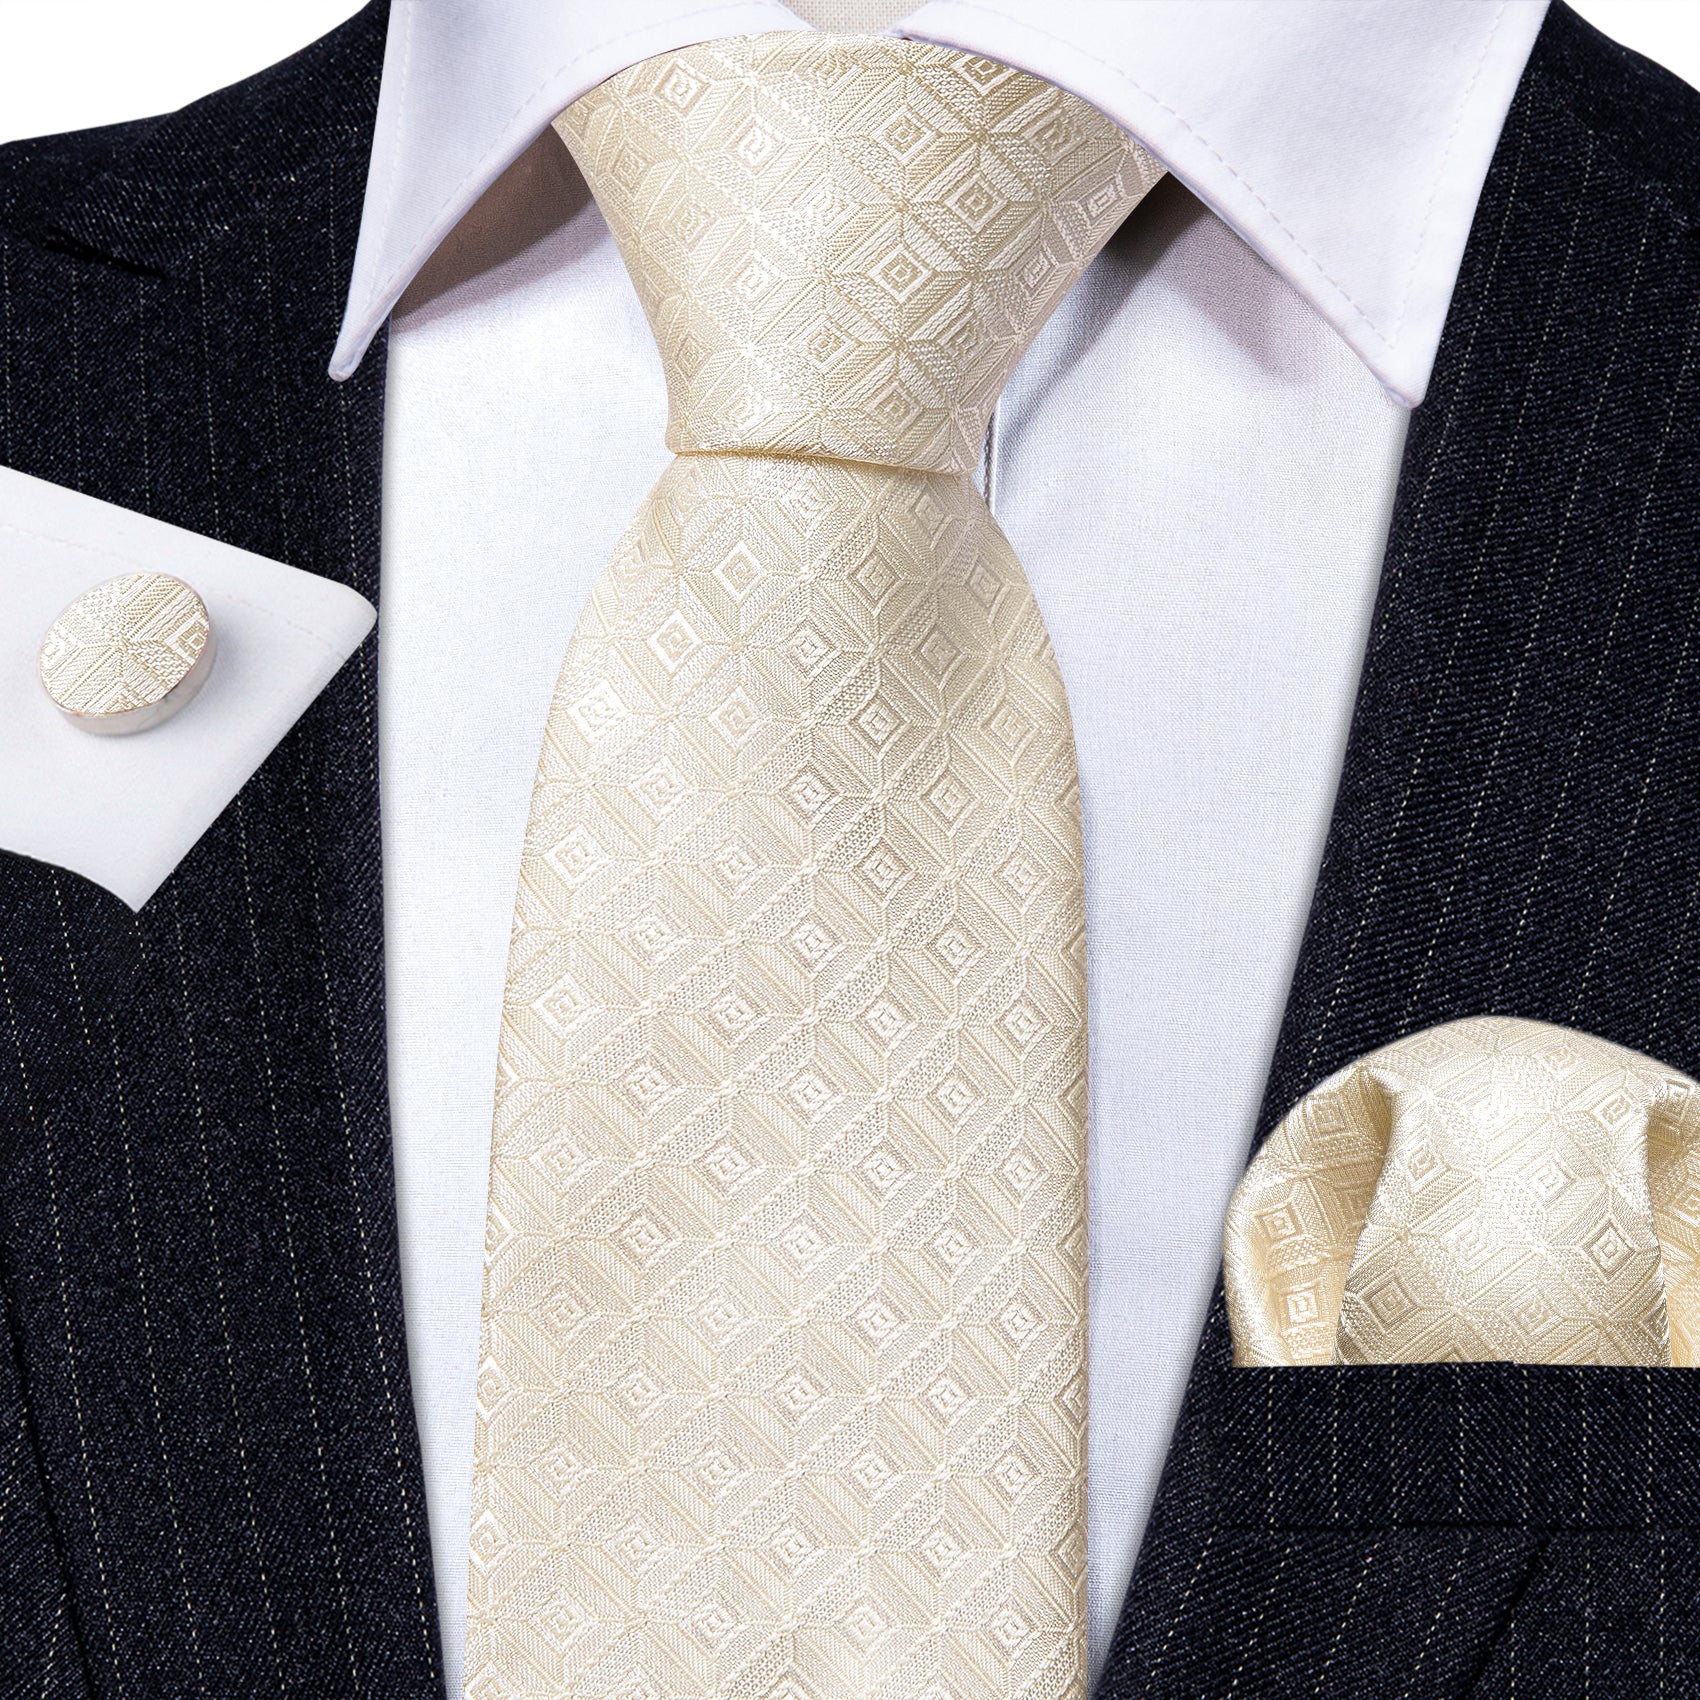 Barry.wang Cream Tie Novelty Geometry Silk Tie Handkerchief Cufflinks Set